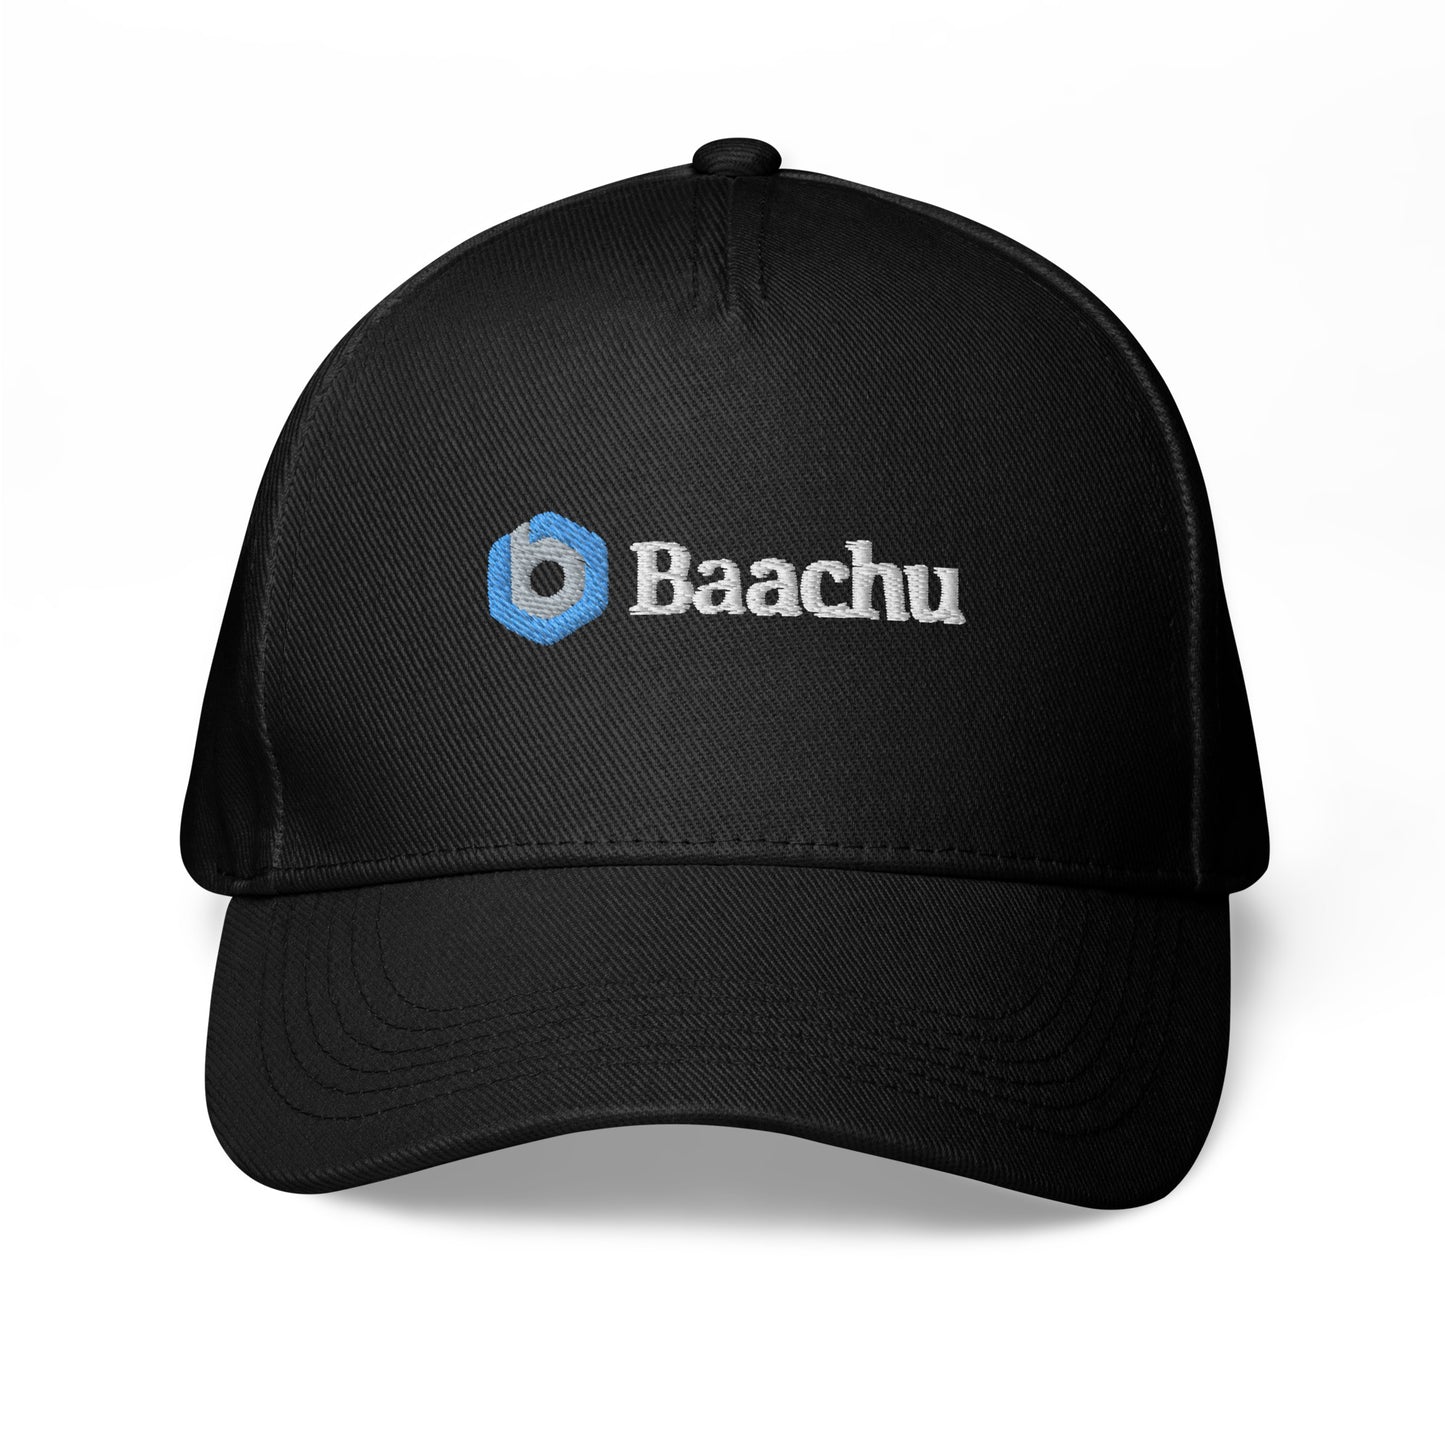 Baachu Classic baseball cap